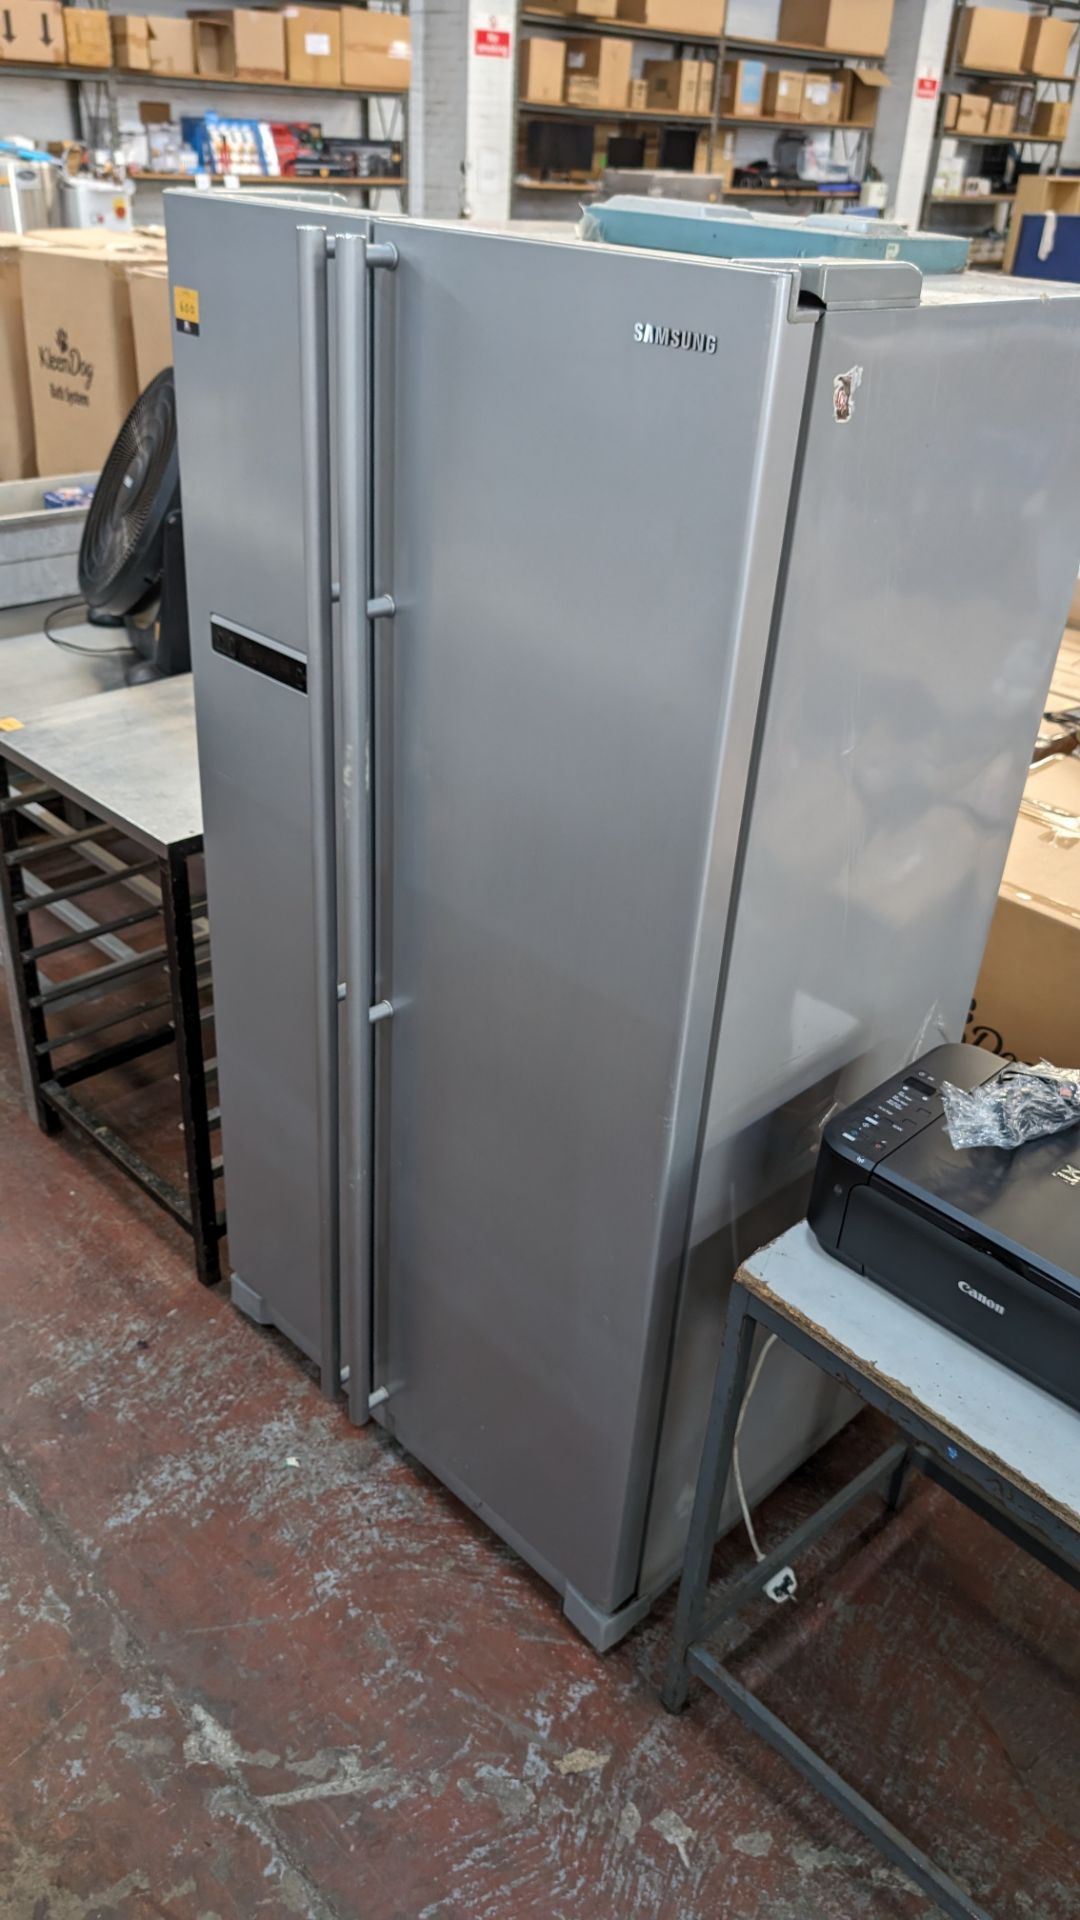 Samsung American Style silver fridge/freezer model RSA1NTPE - Image 4 of 13